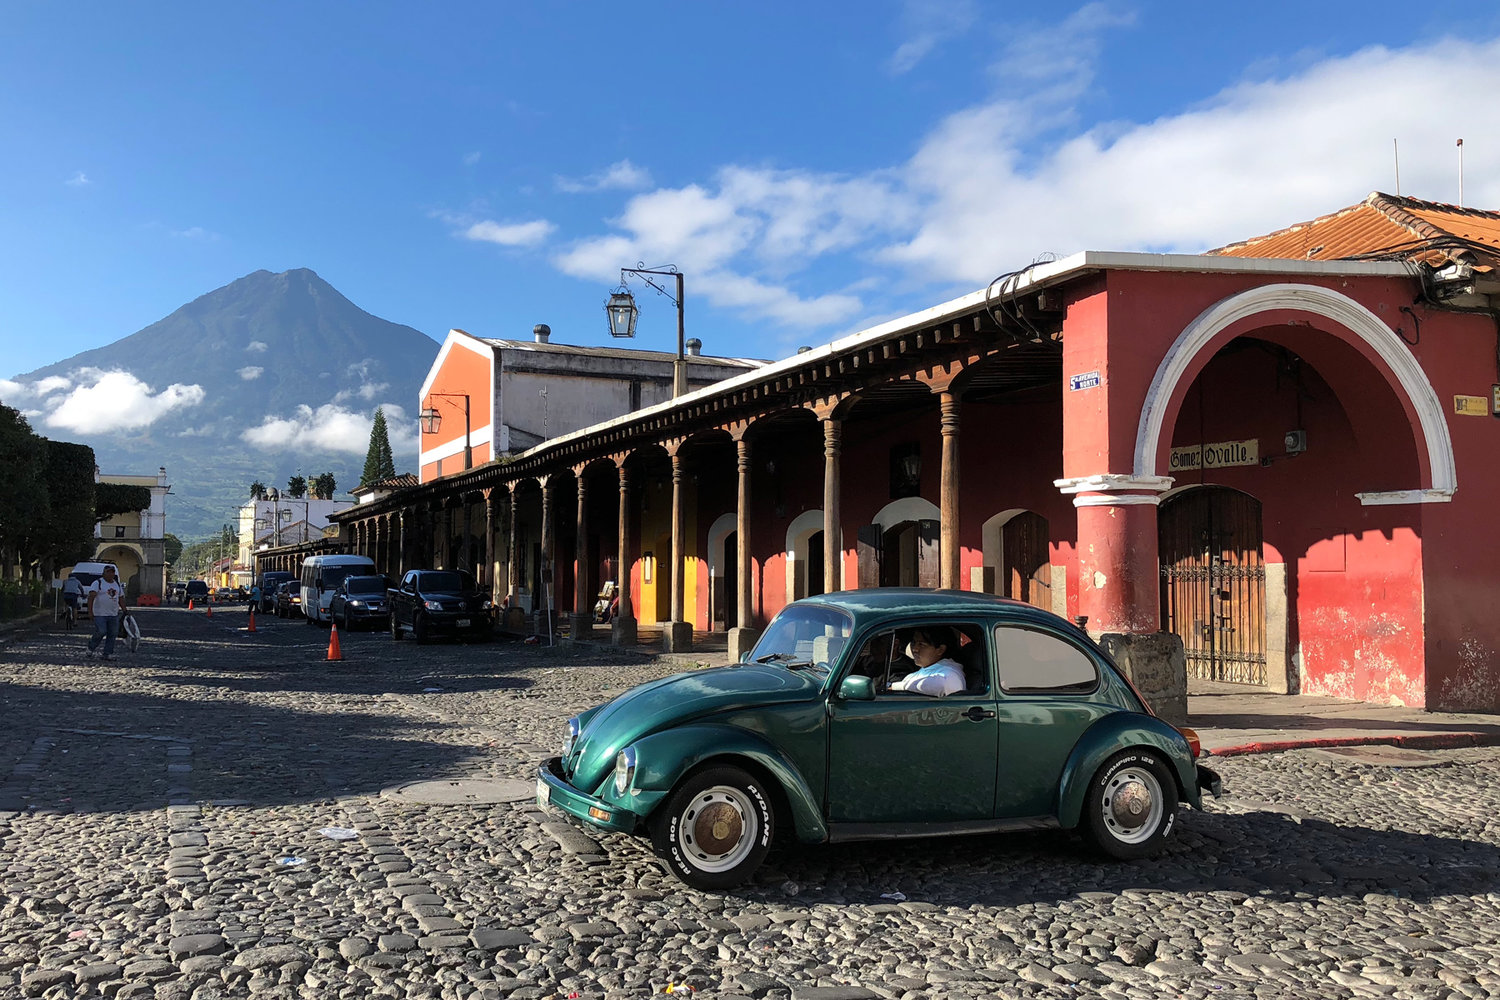 Foto hecha por Austin Mann en Guatemala con un iPhone X